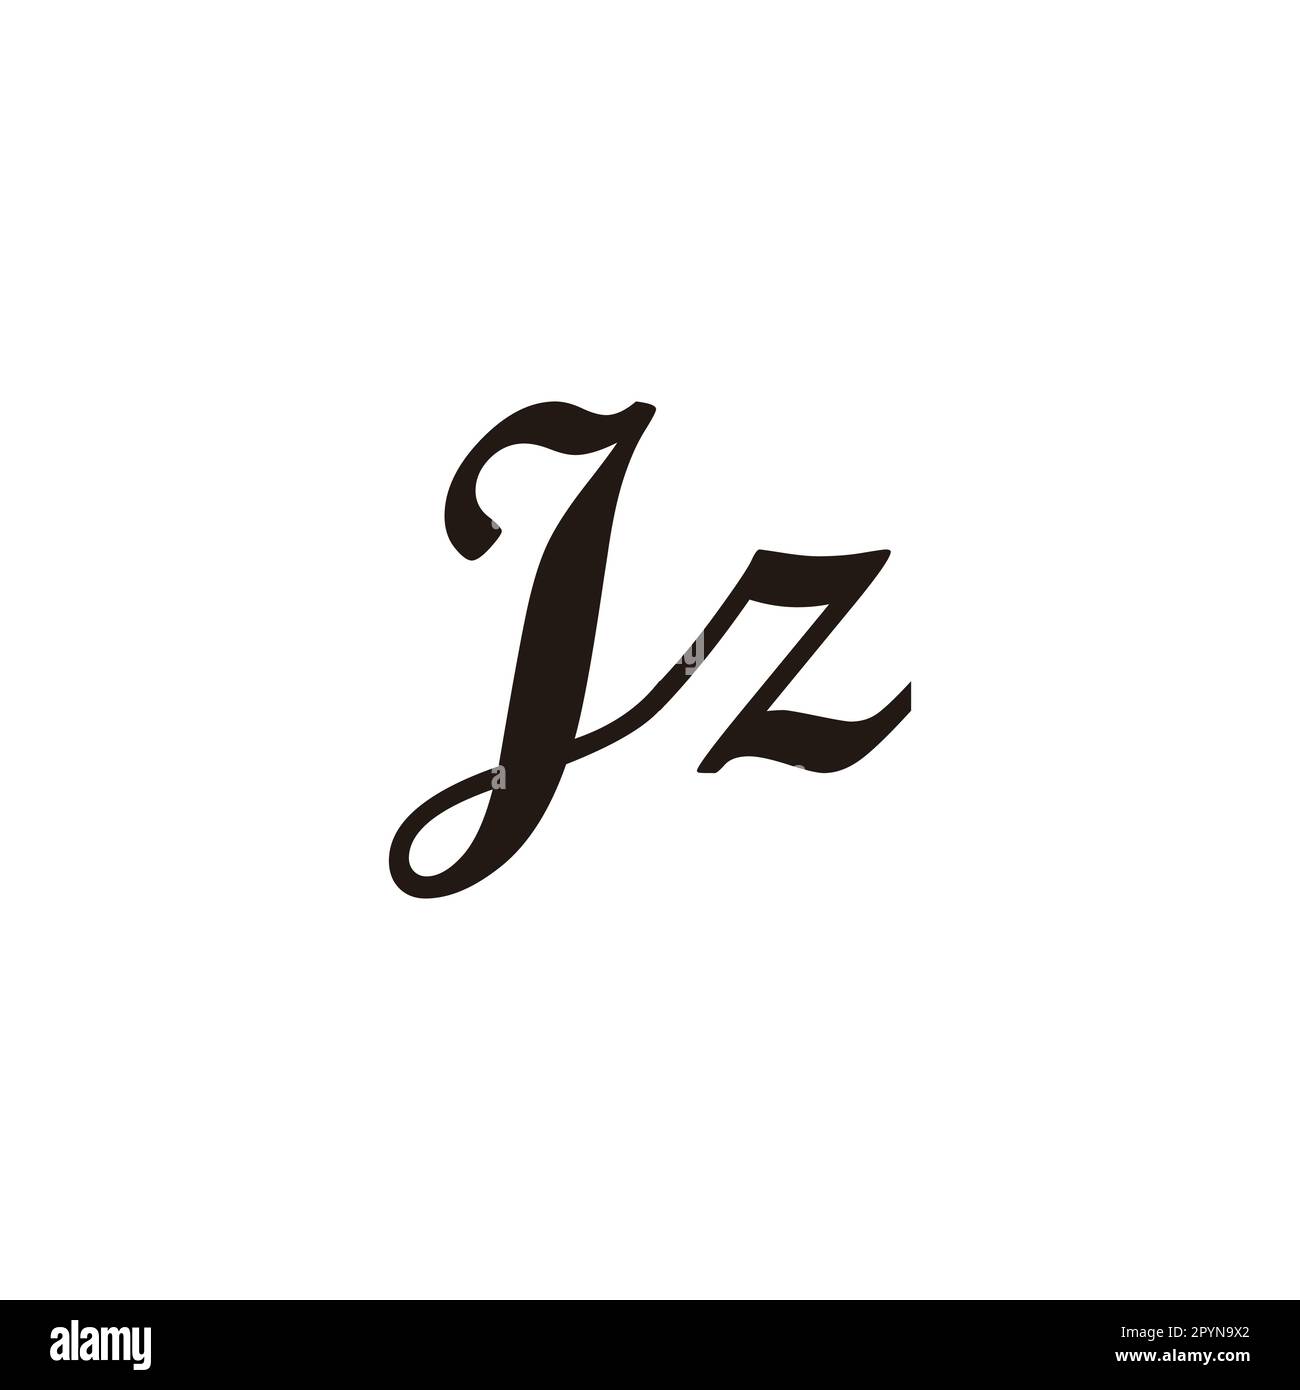 Letter Jz connect geometric symbol simple logo vector Stock Vector